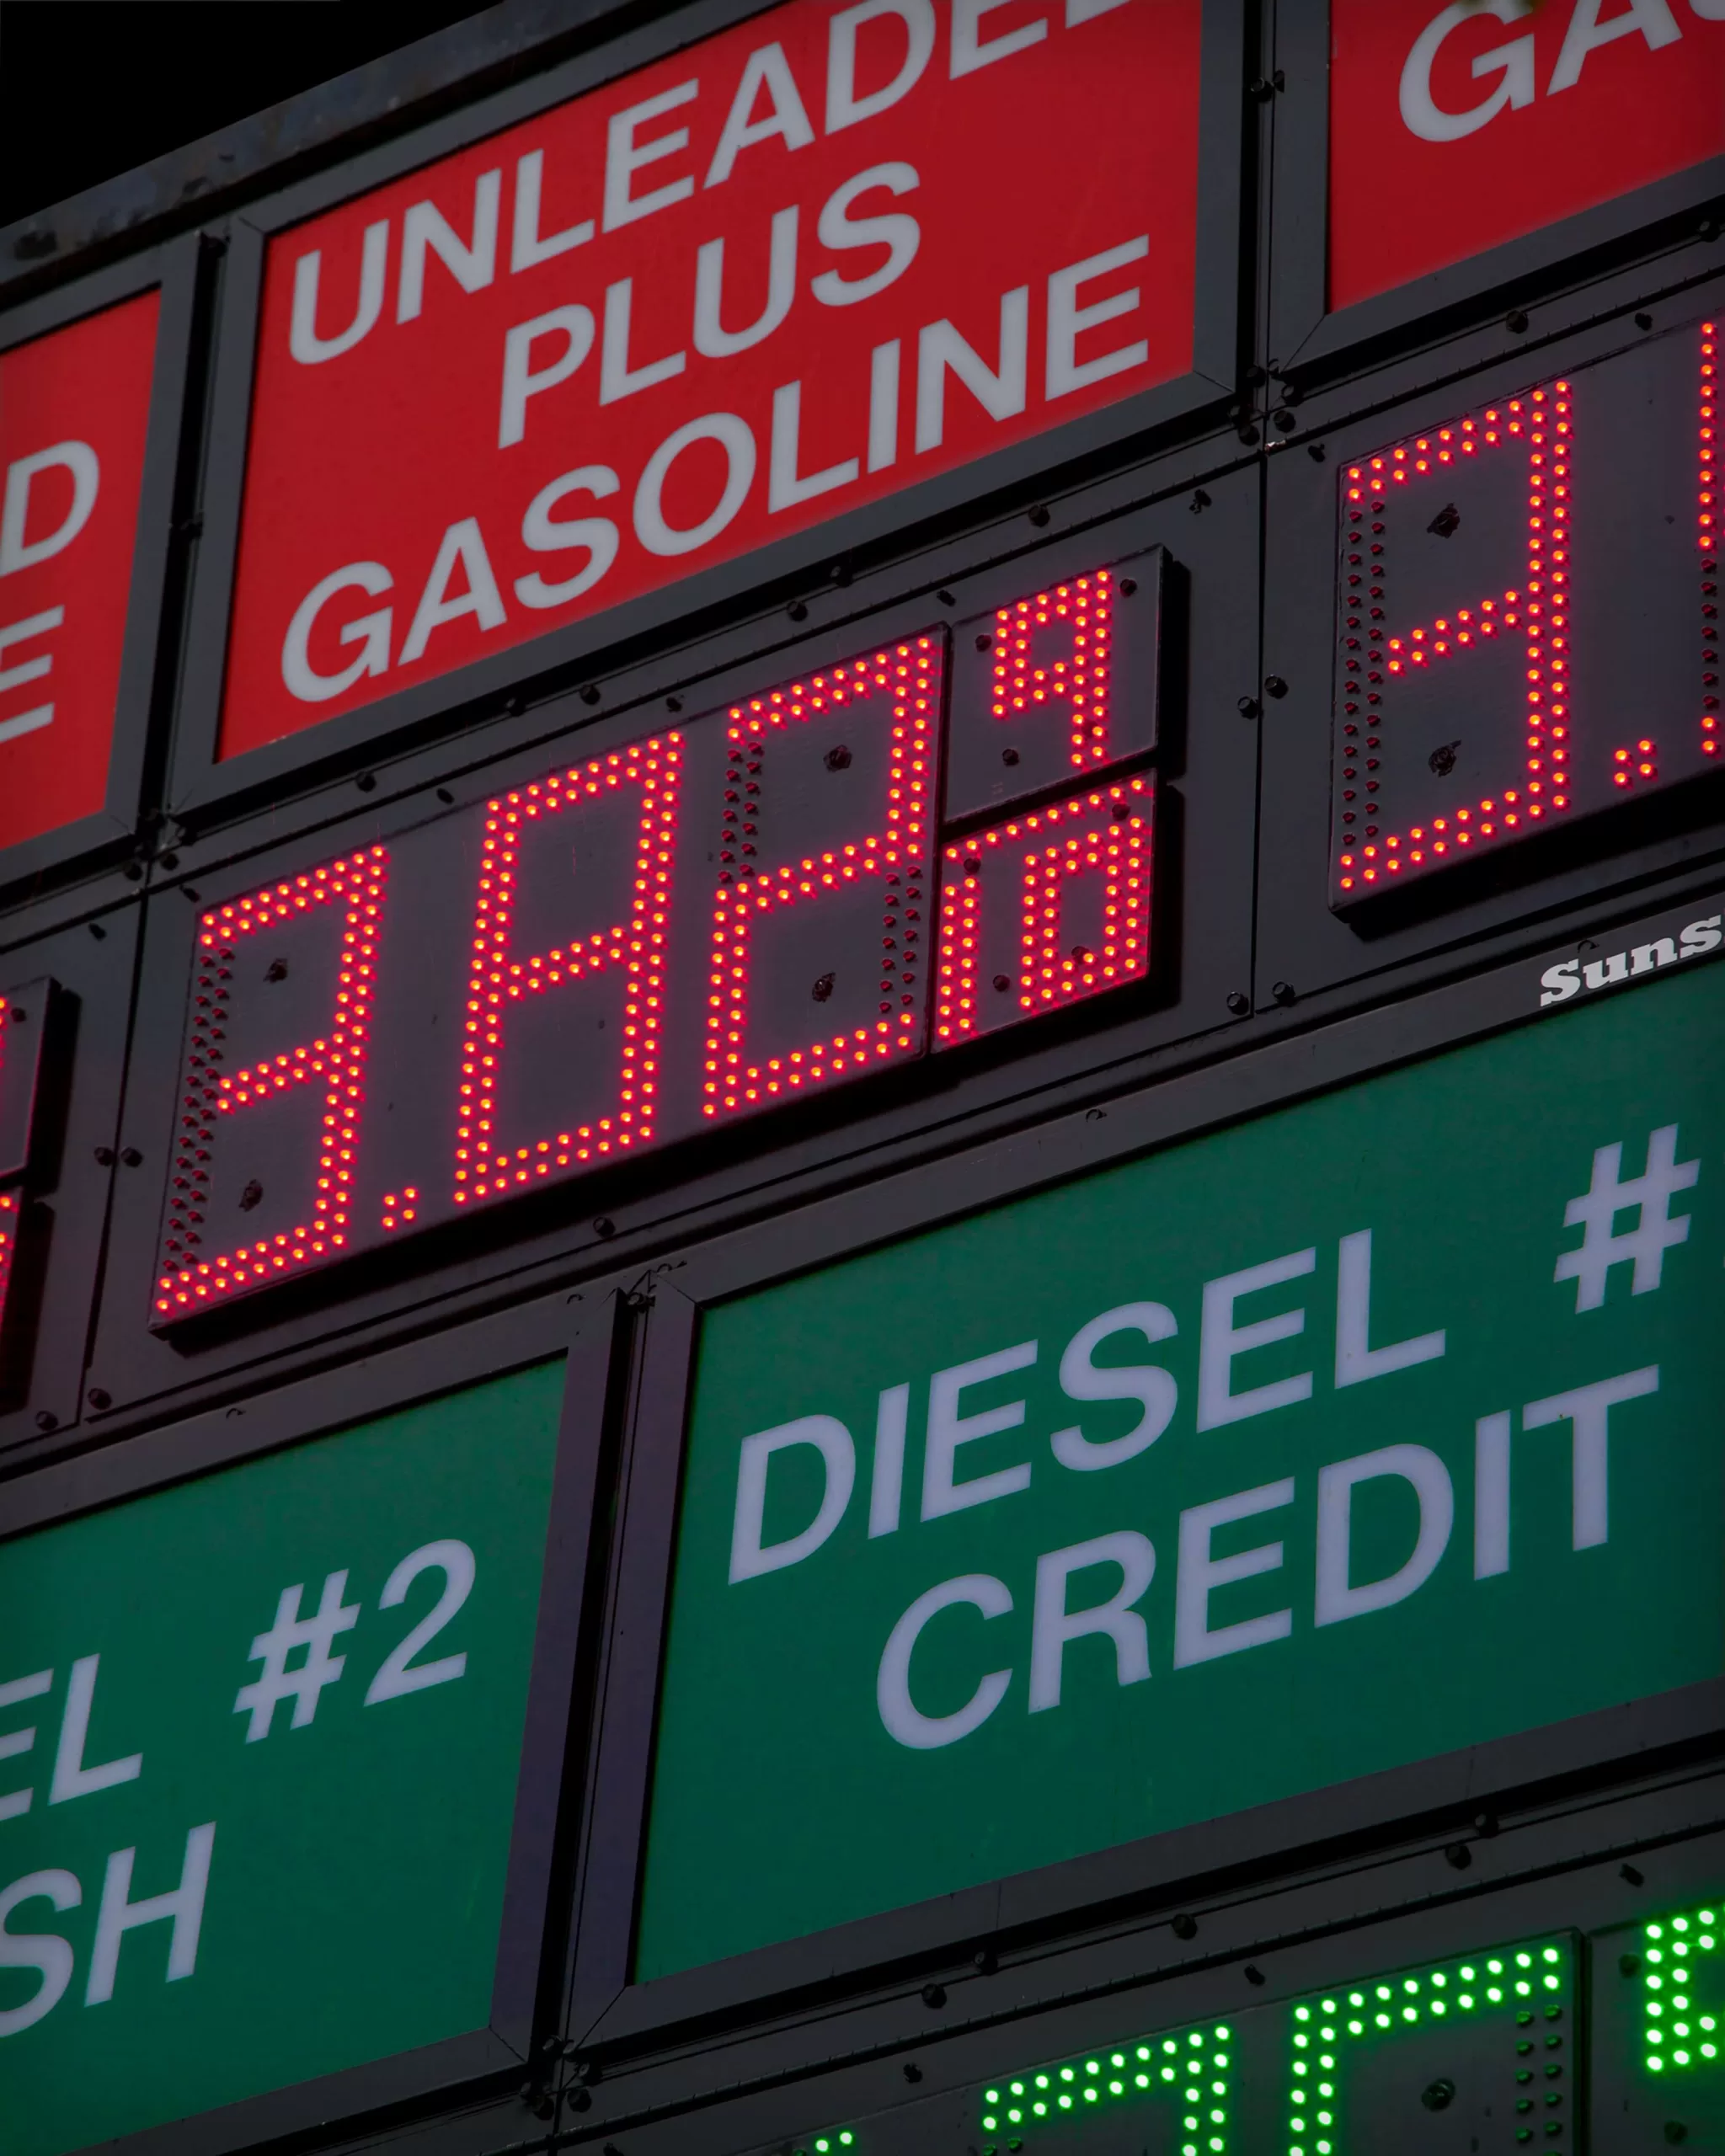 Federal Rate Hike-Gas Price increasing